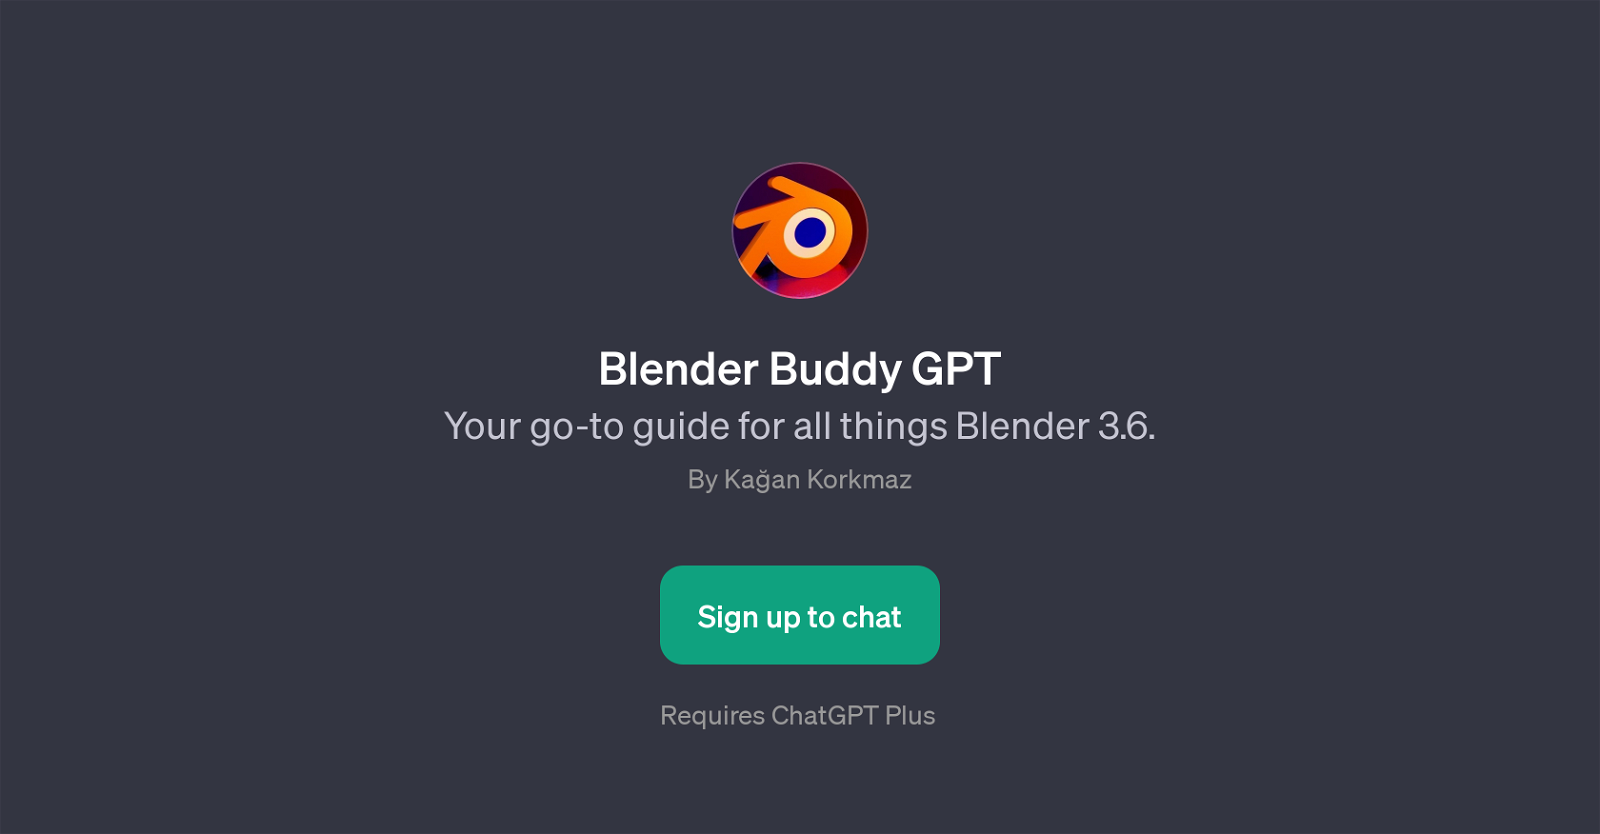 Blender Buddy GPT website